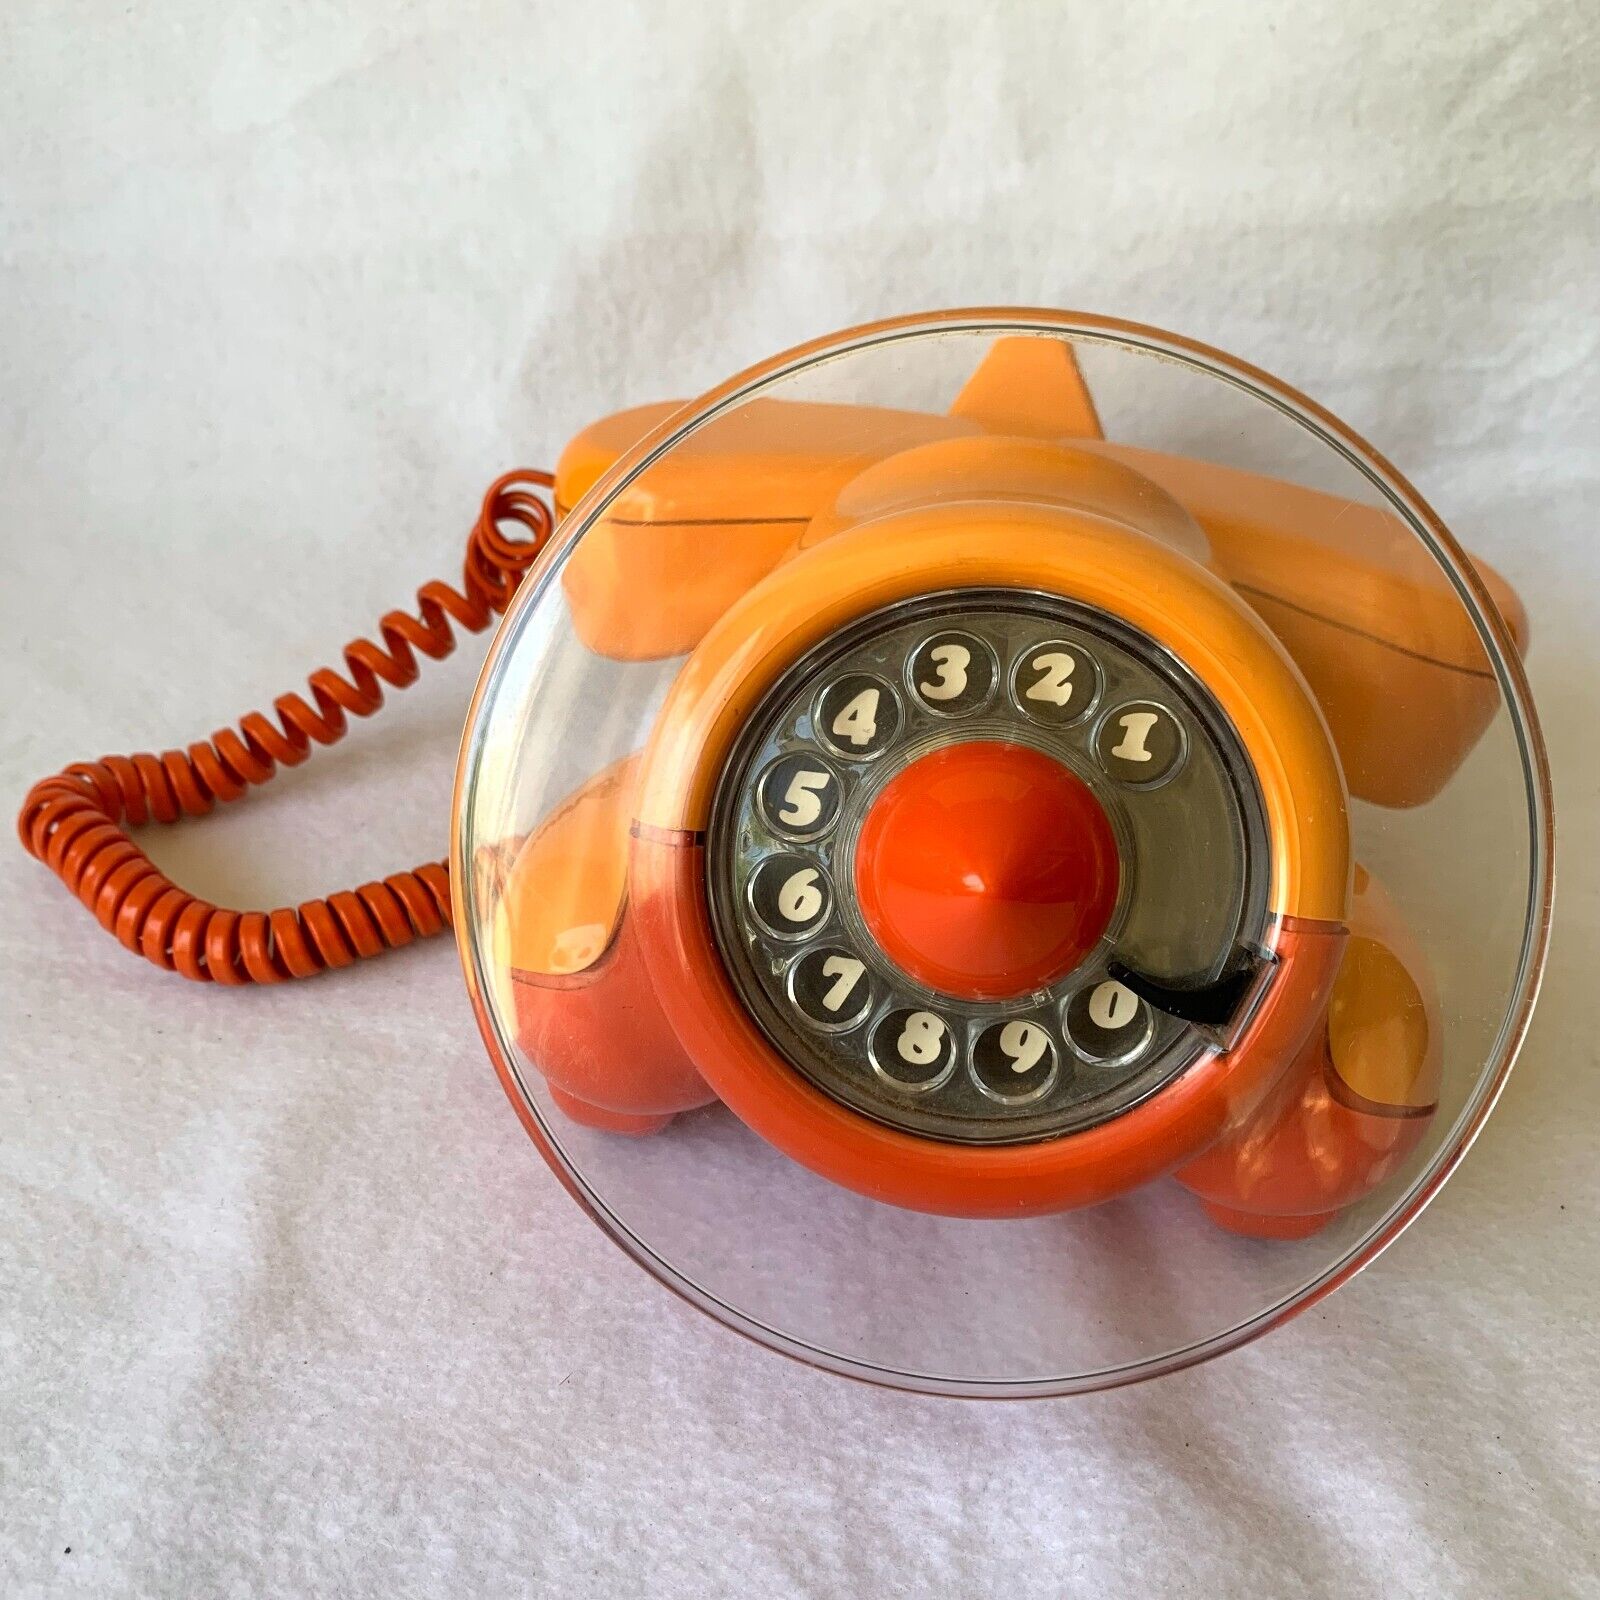 Orange Alexander Graham Plane Telephone Used 70’s Vintage Rotary Dial Orange